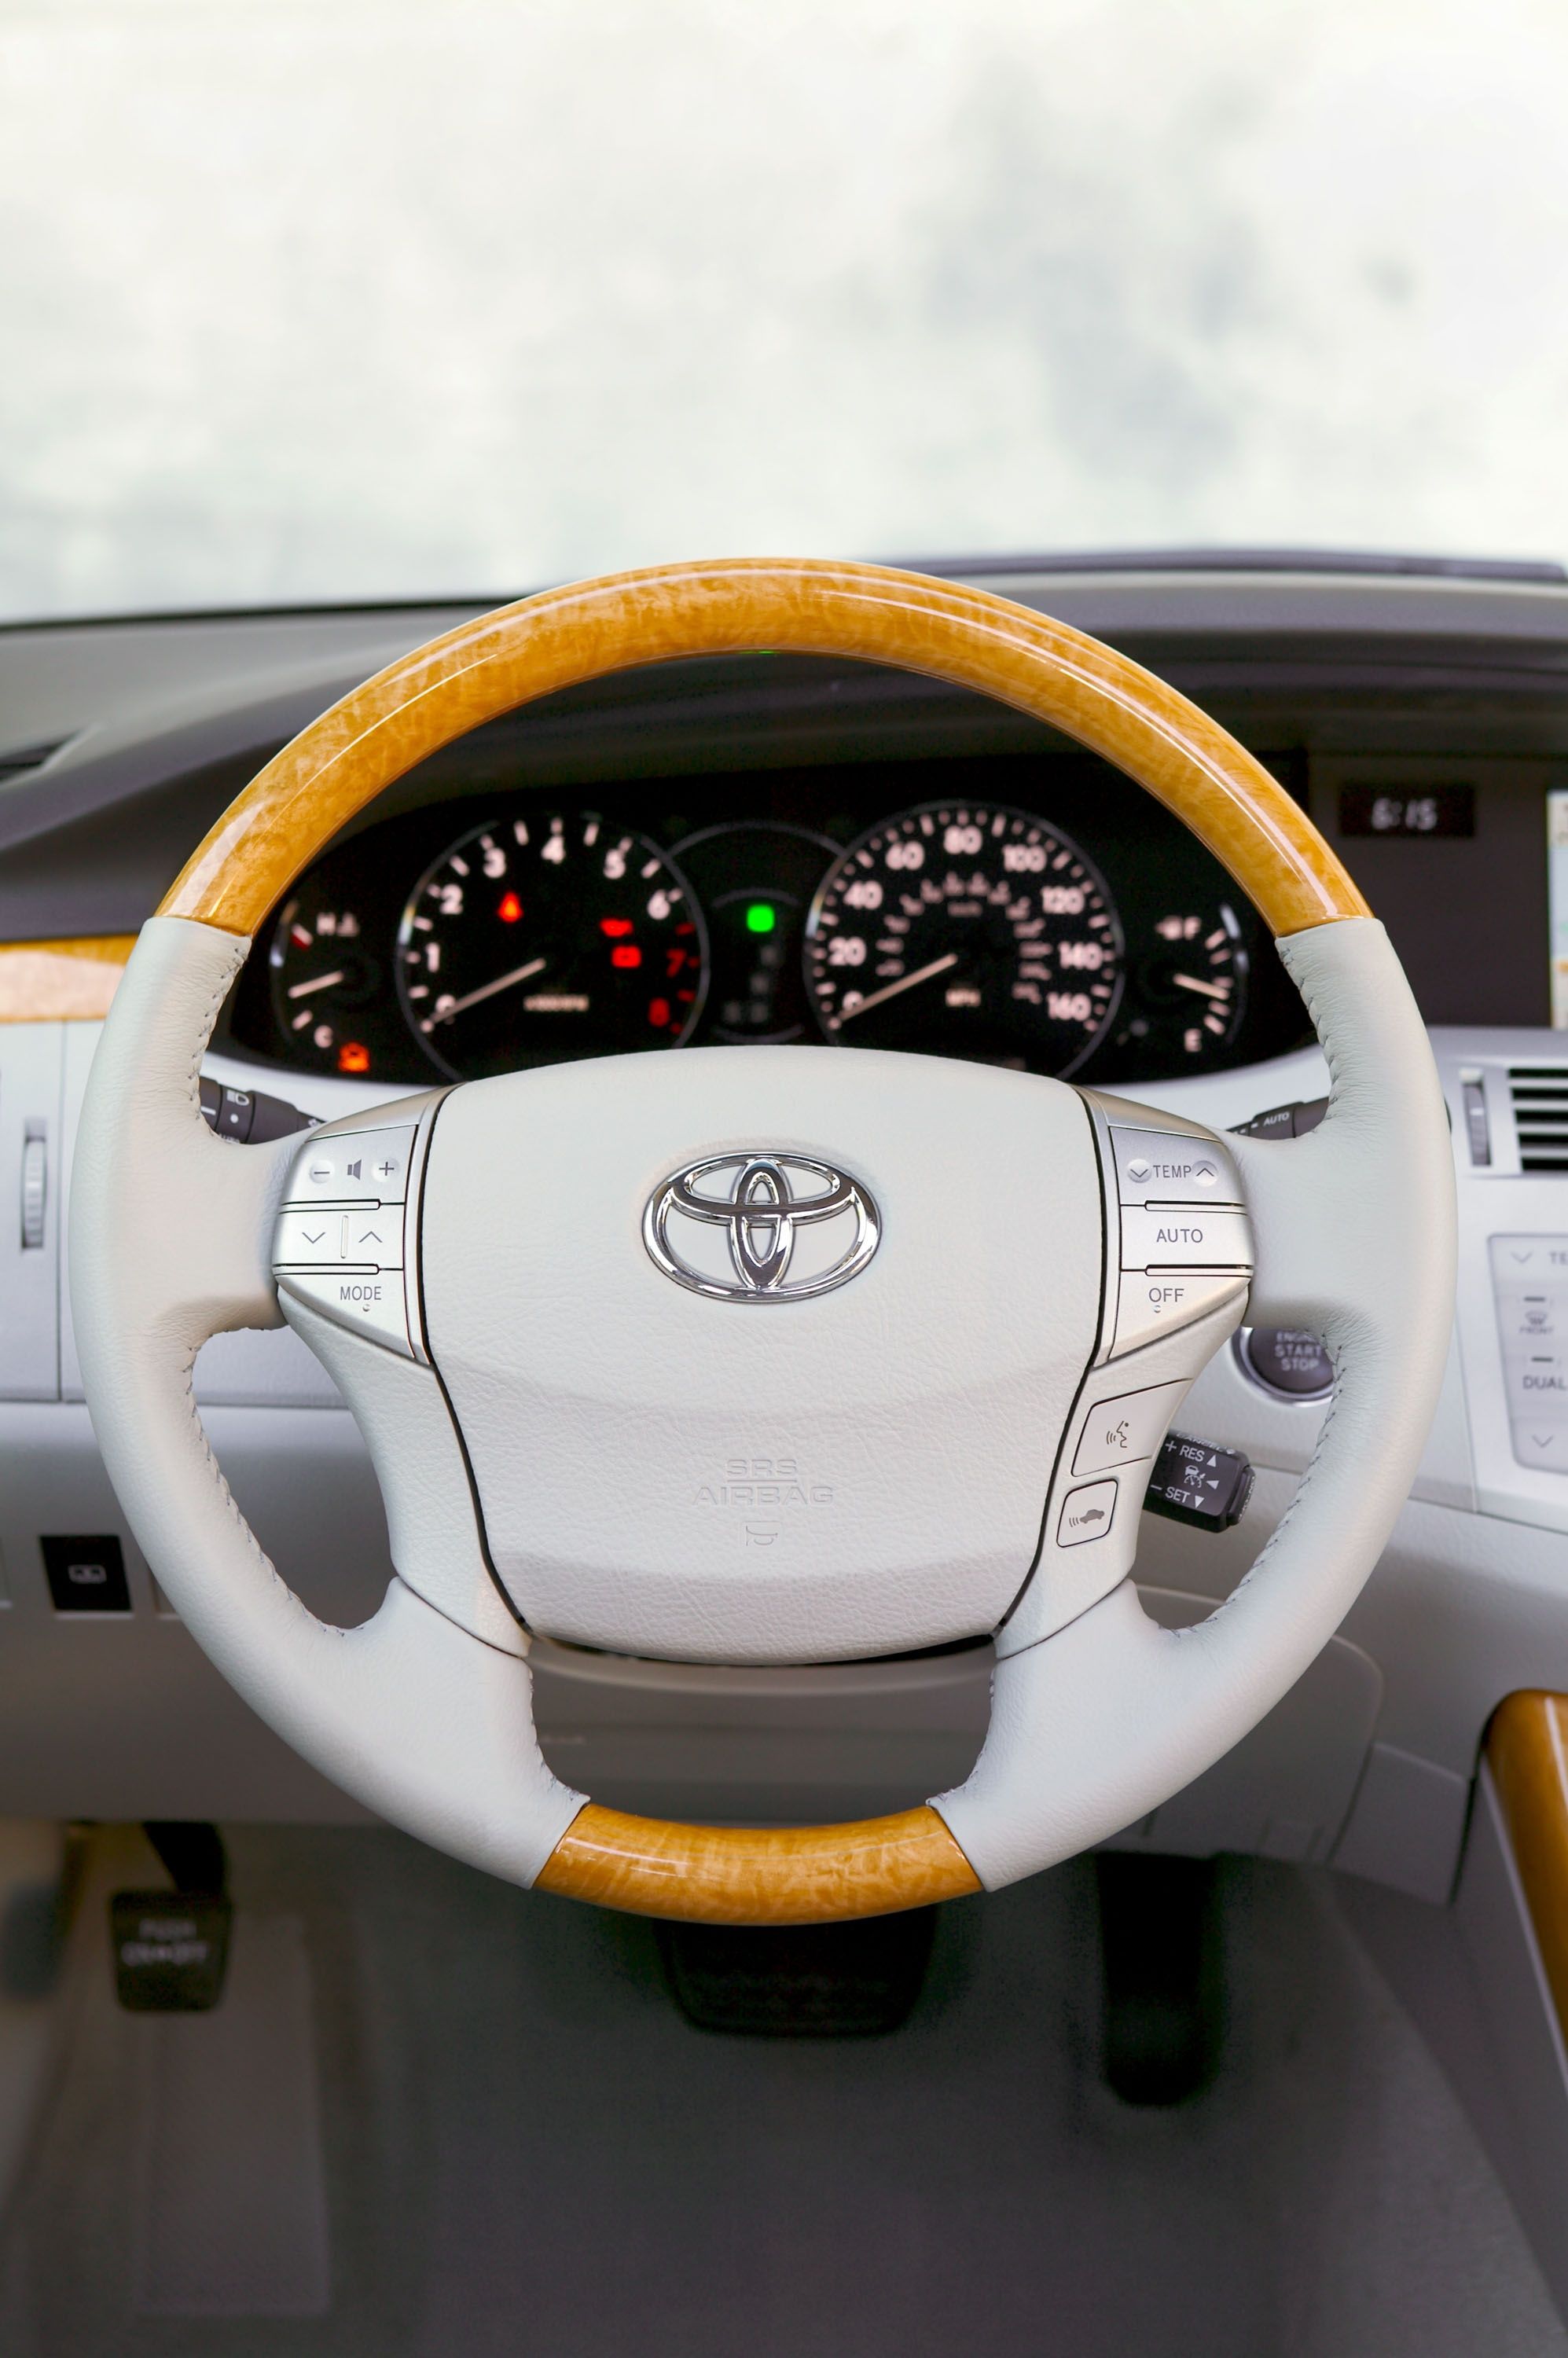 2007 Toyota Avalon